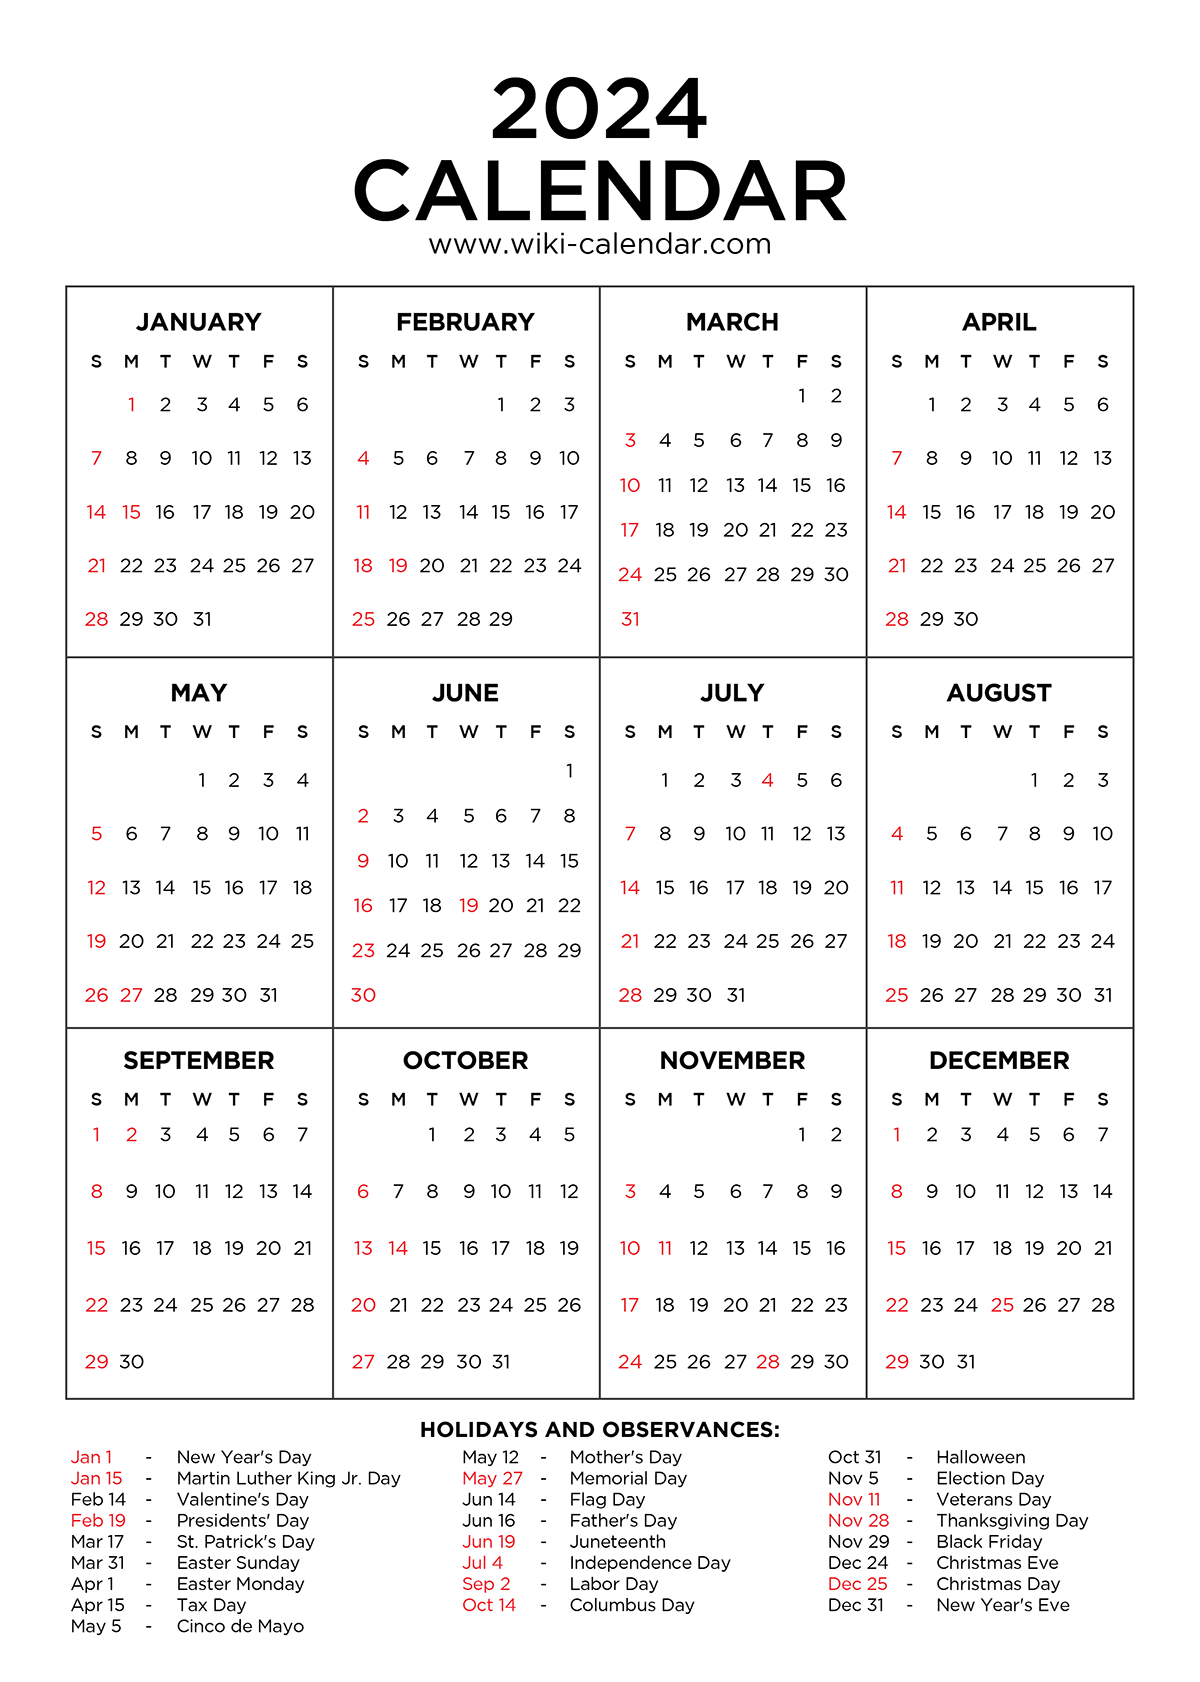 Year 2024 Calendar Printable With Holidays - Wiki Calendar | Printable 2024 Calendar With Holidays Usa